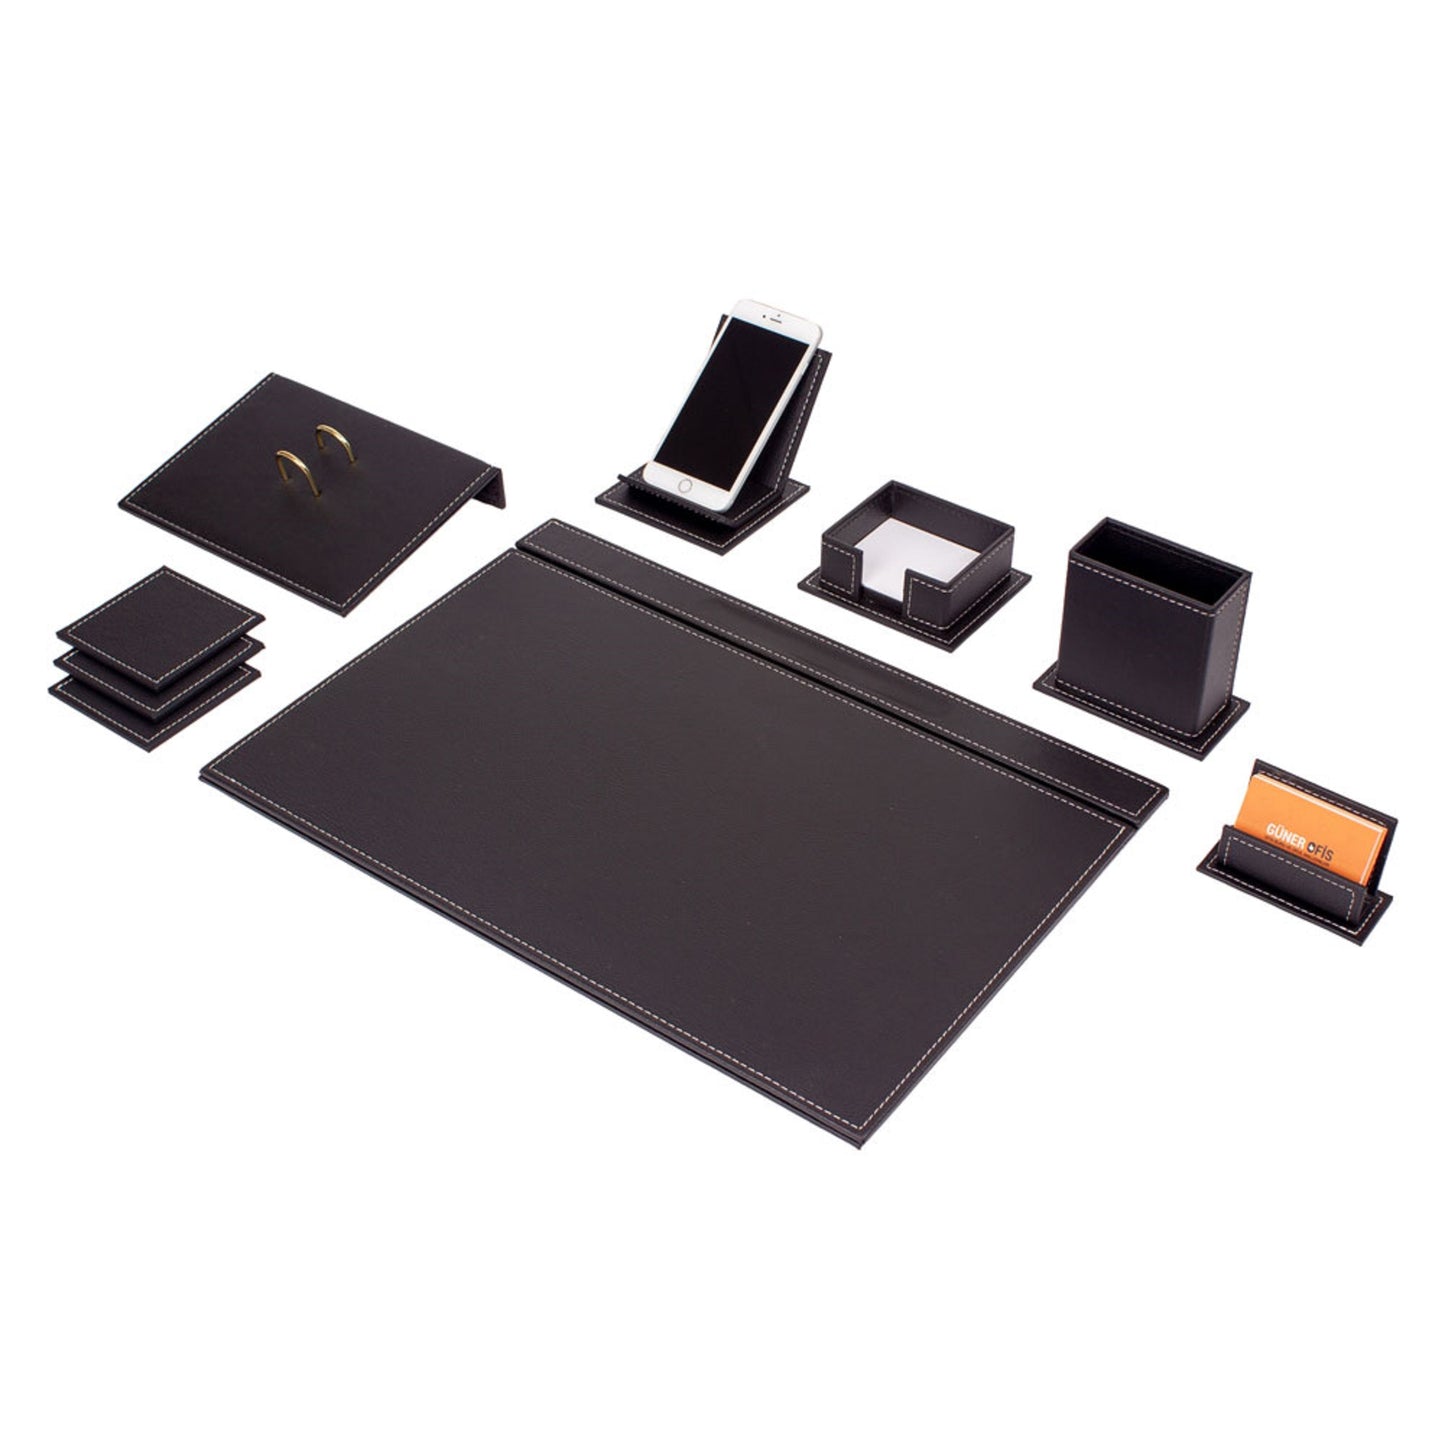 MOOG Leather Desk Set 9 Pieces-Desk Office Accessories-Storage-Desk Organizers And Accessories-Office Desk Accessories-Desk Organizer Set-Desk Pads & Blotters - 9 PCS